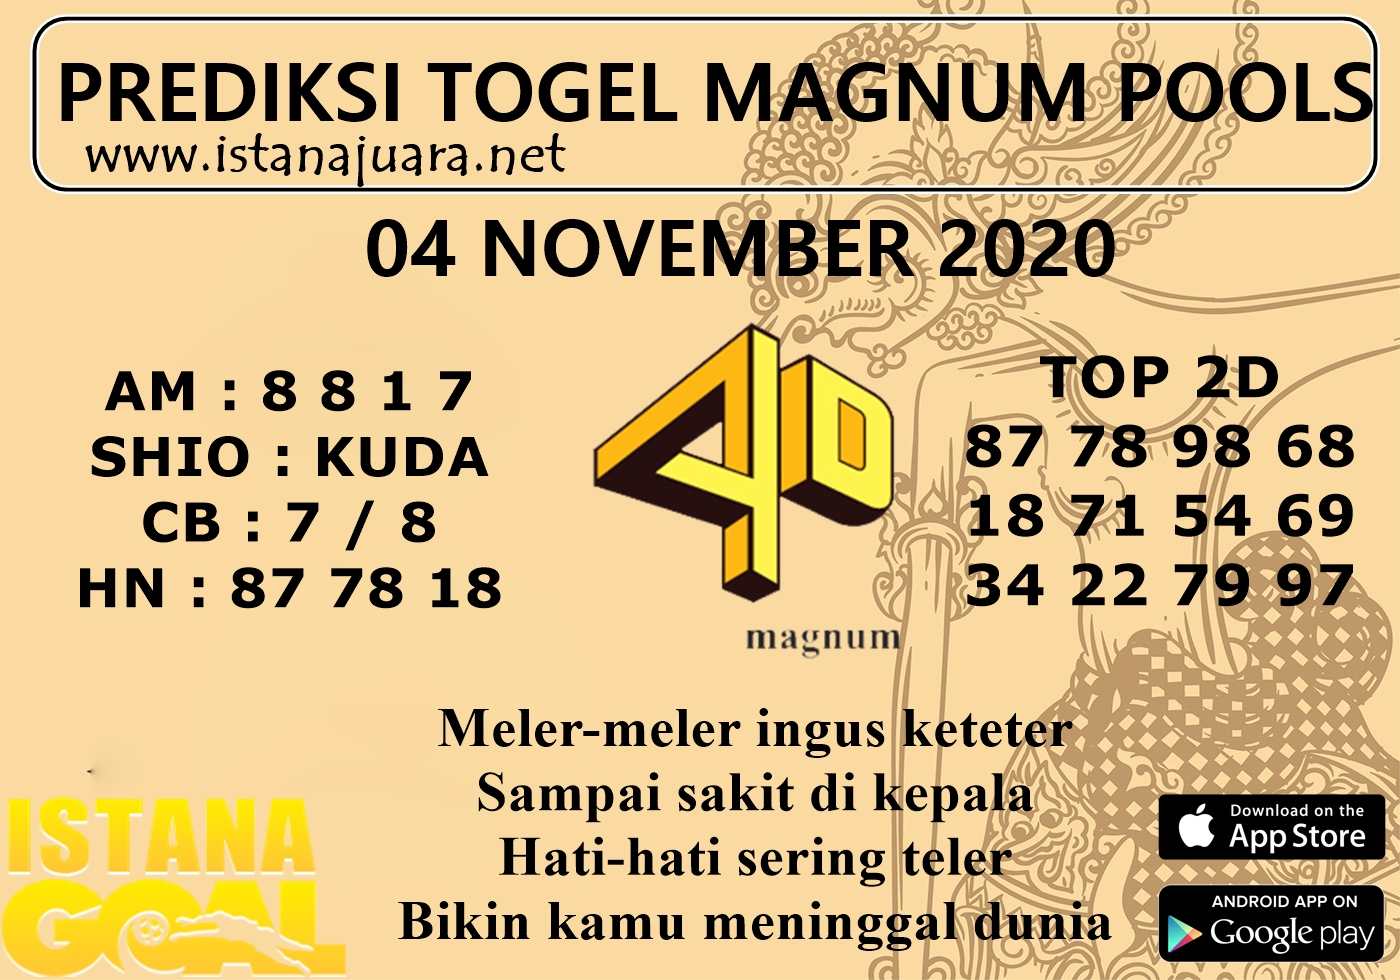 PREDIKSI TOGEL MAGNUM POOLS 04 NOVEMBER 2020